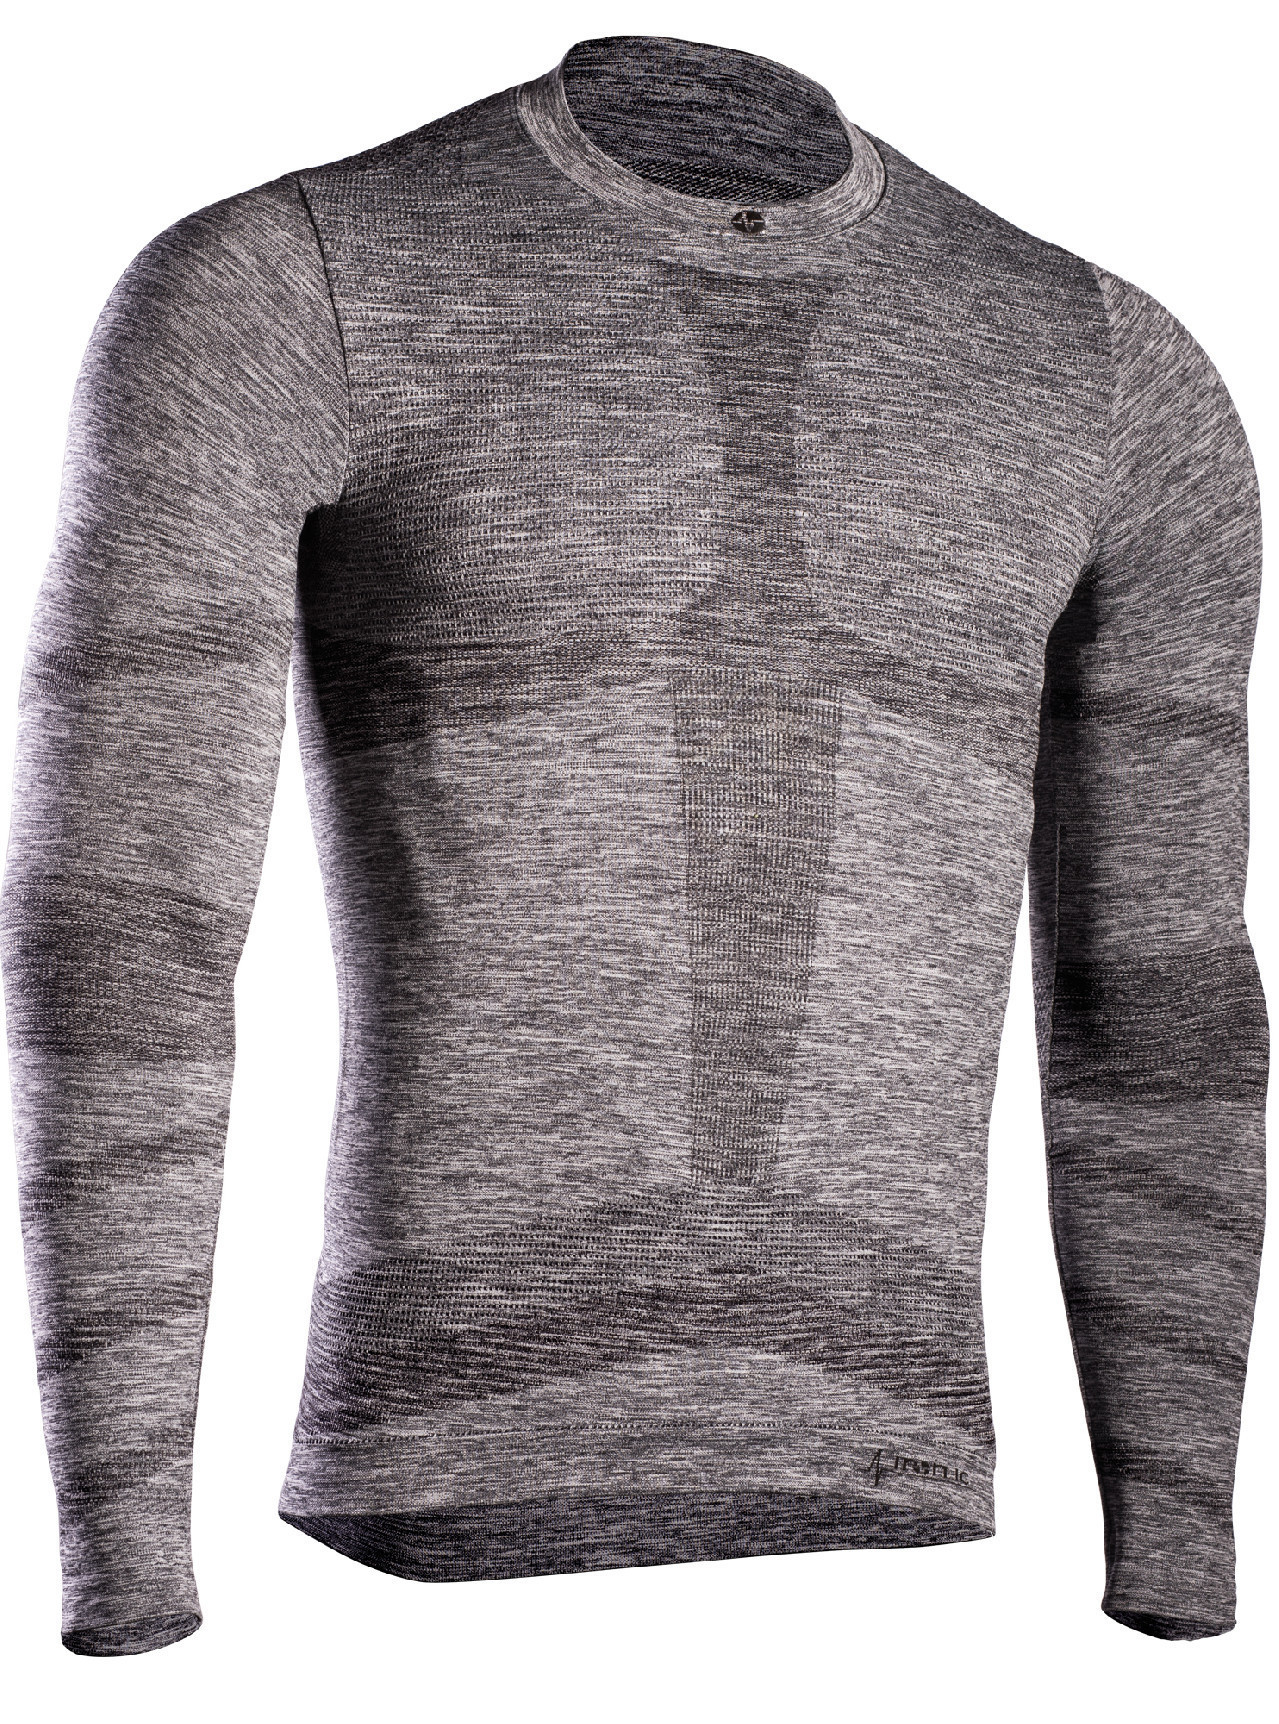 Pánské termo triko s dlouhým rukávem šedá Barva: Velikost: S/M model 15131934 - IRON-IC